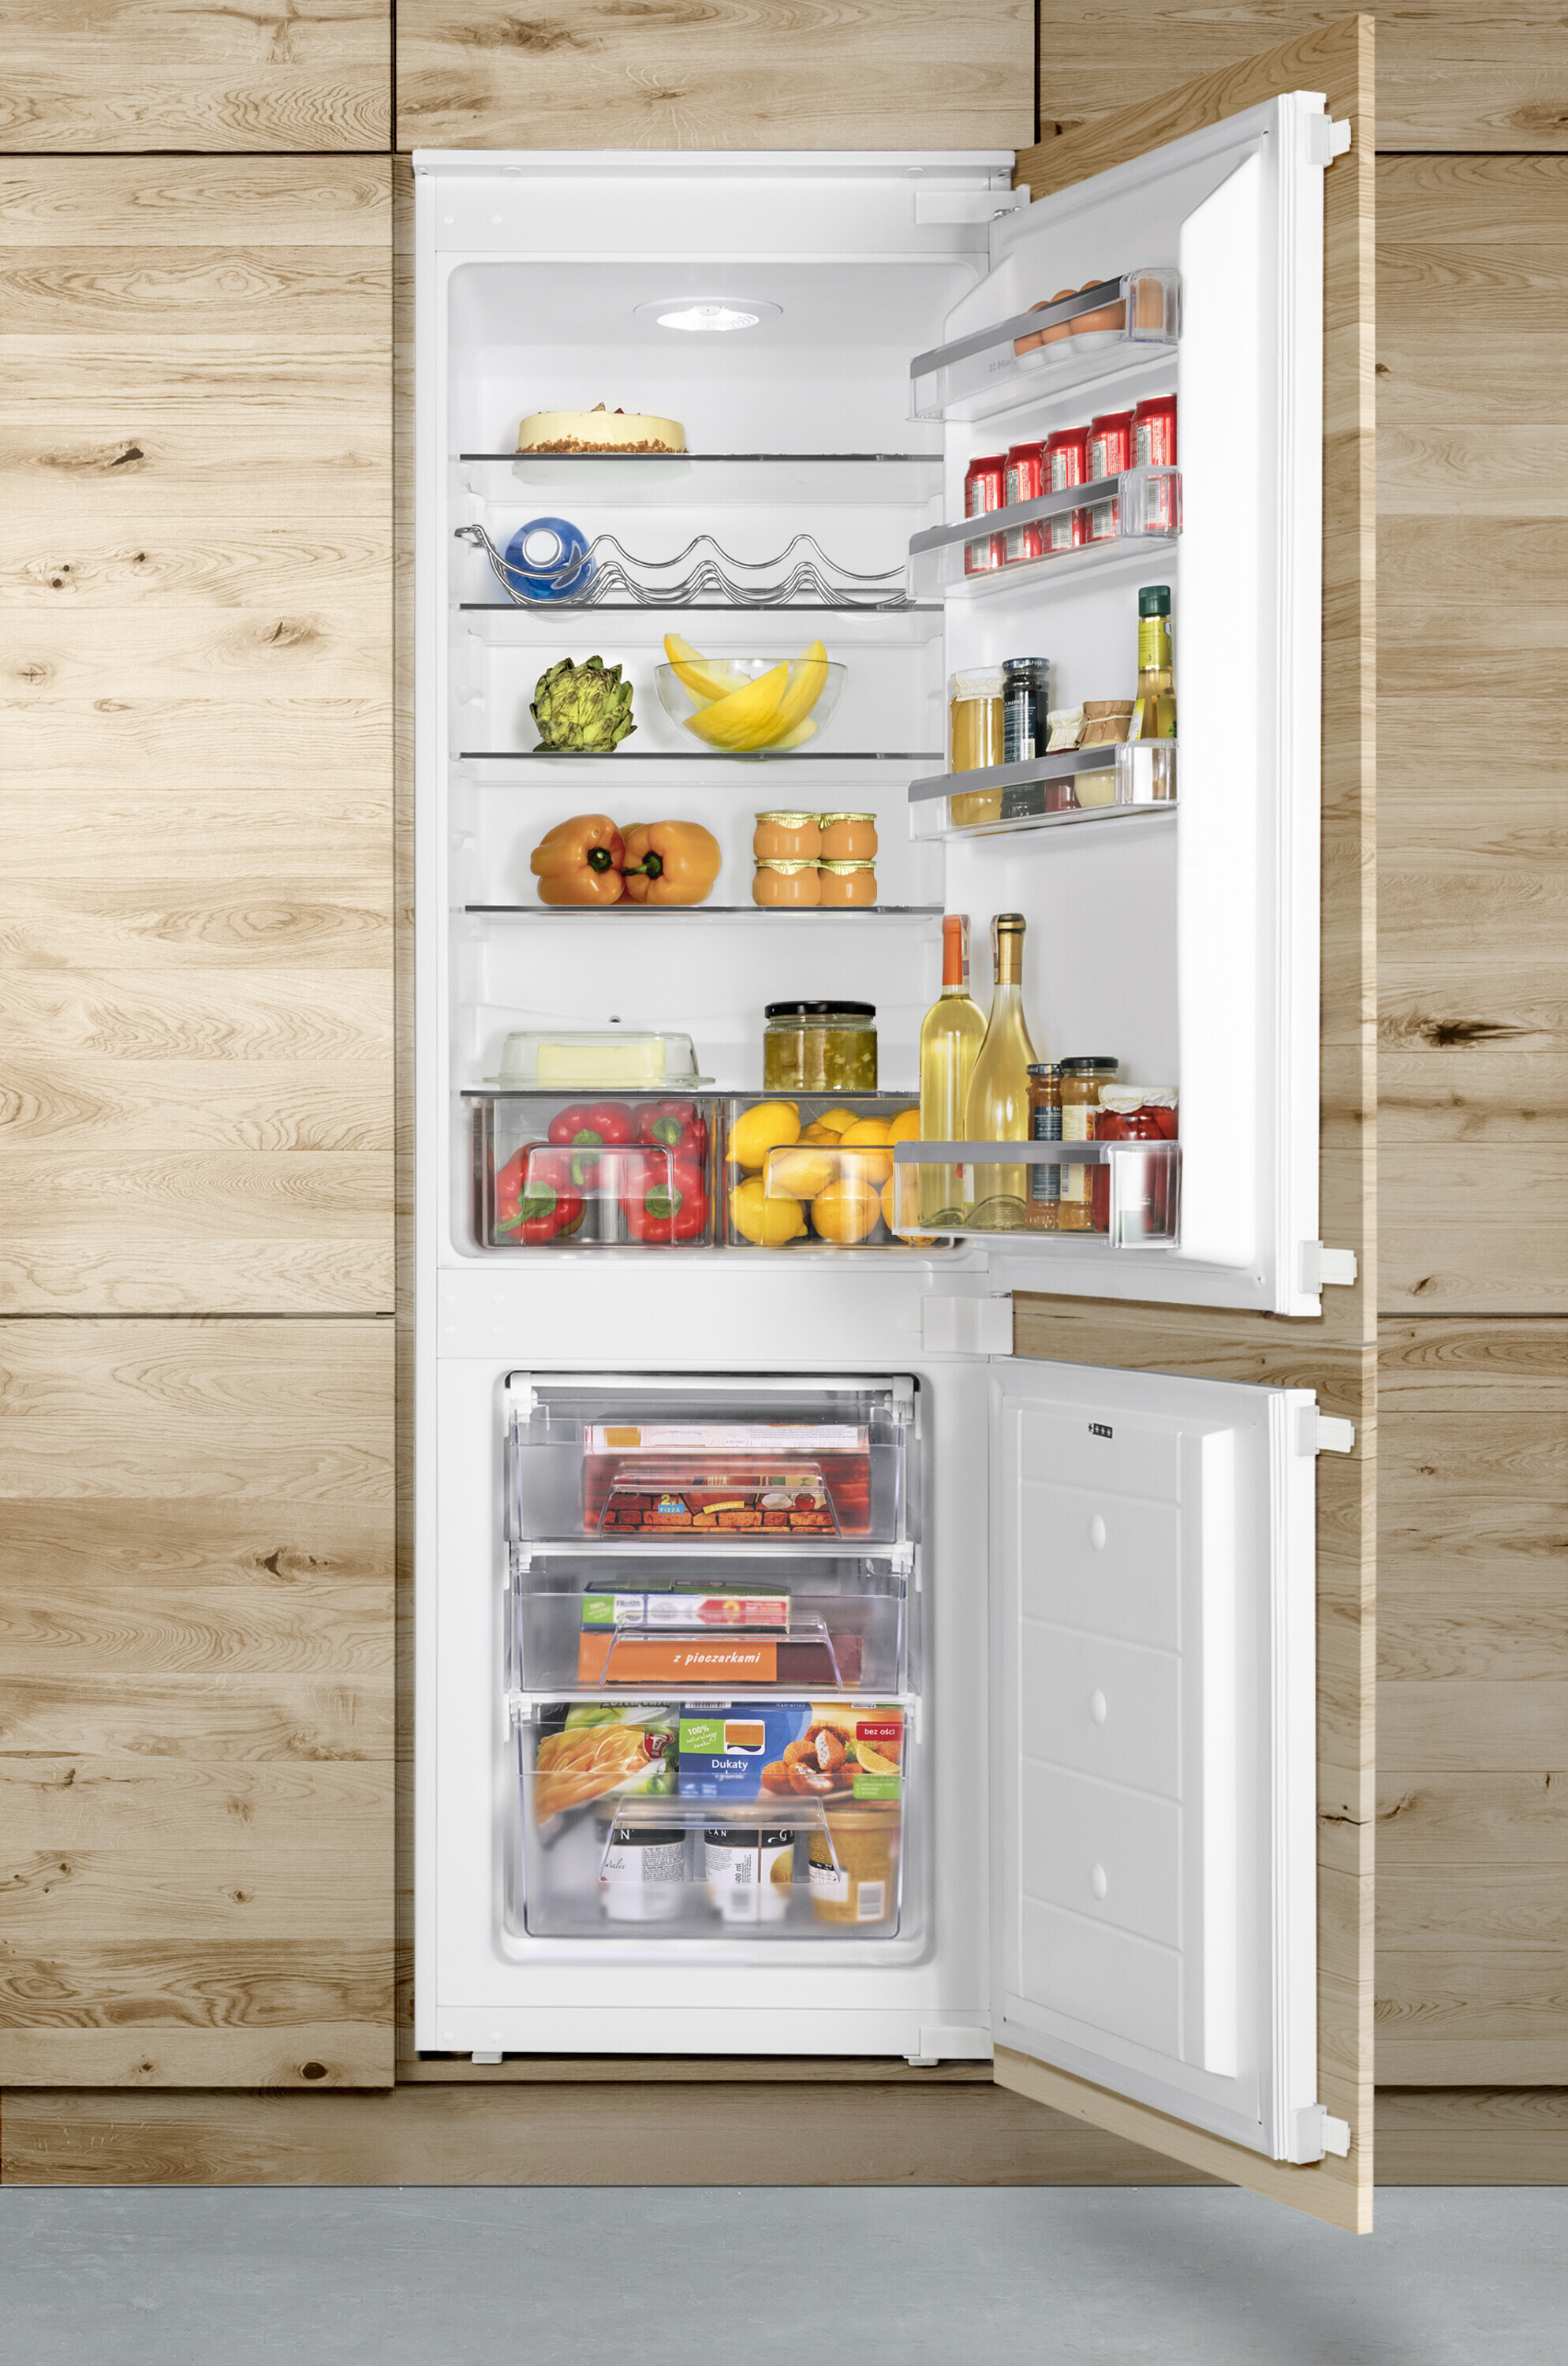 Холодильник вбудований